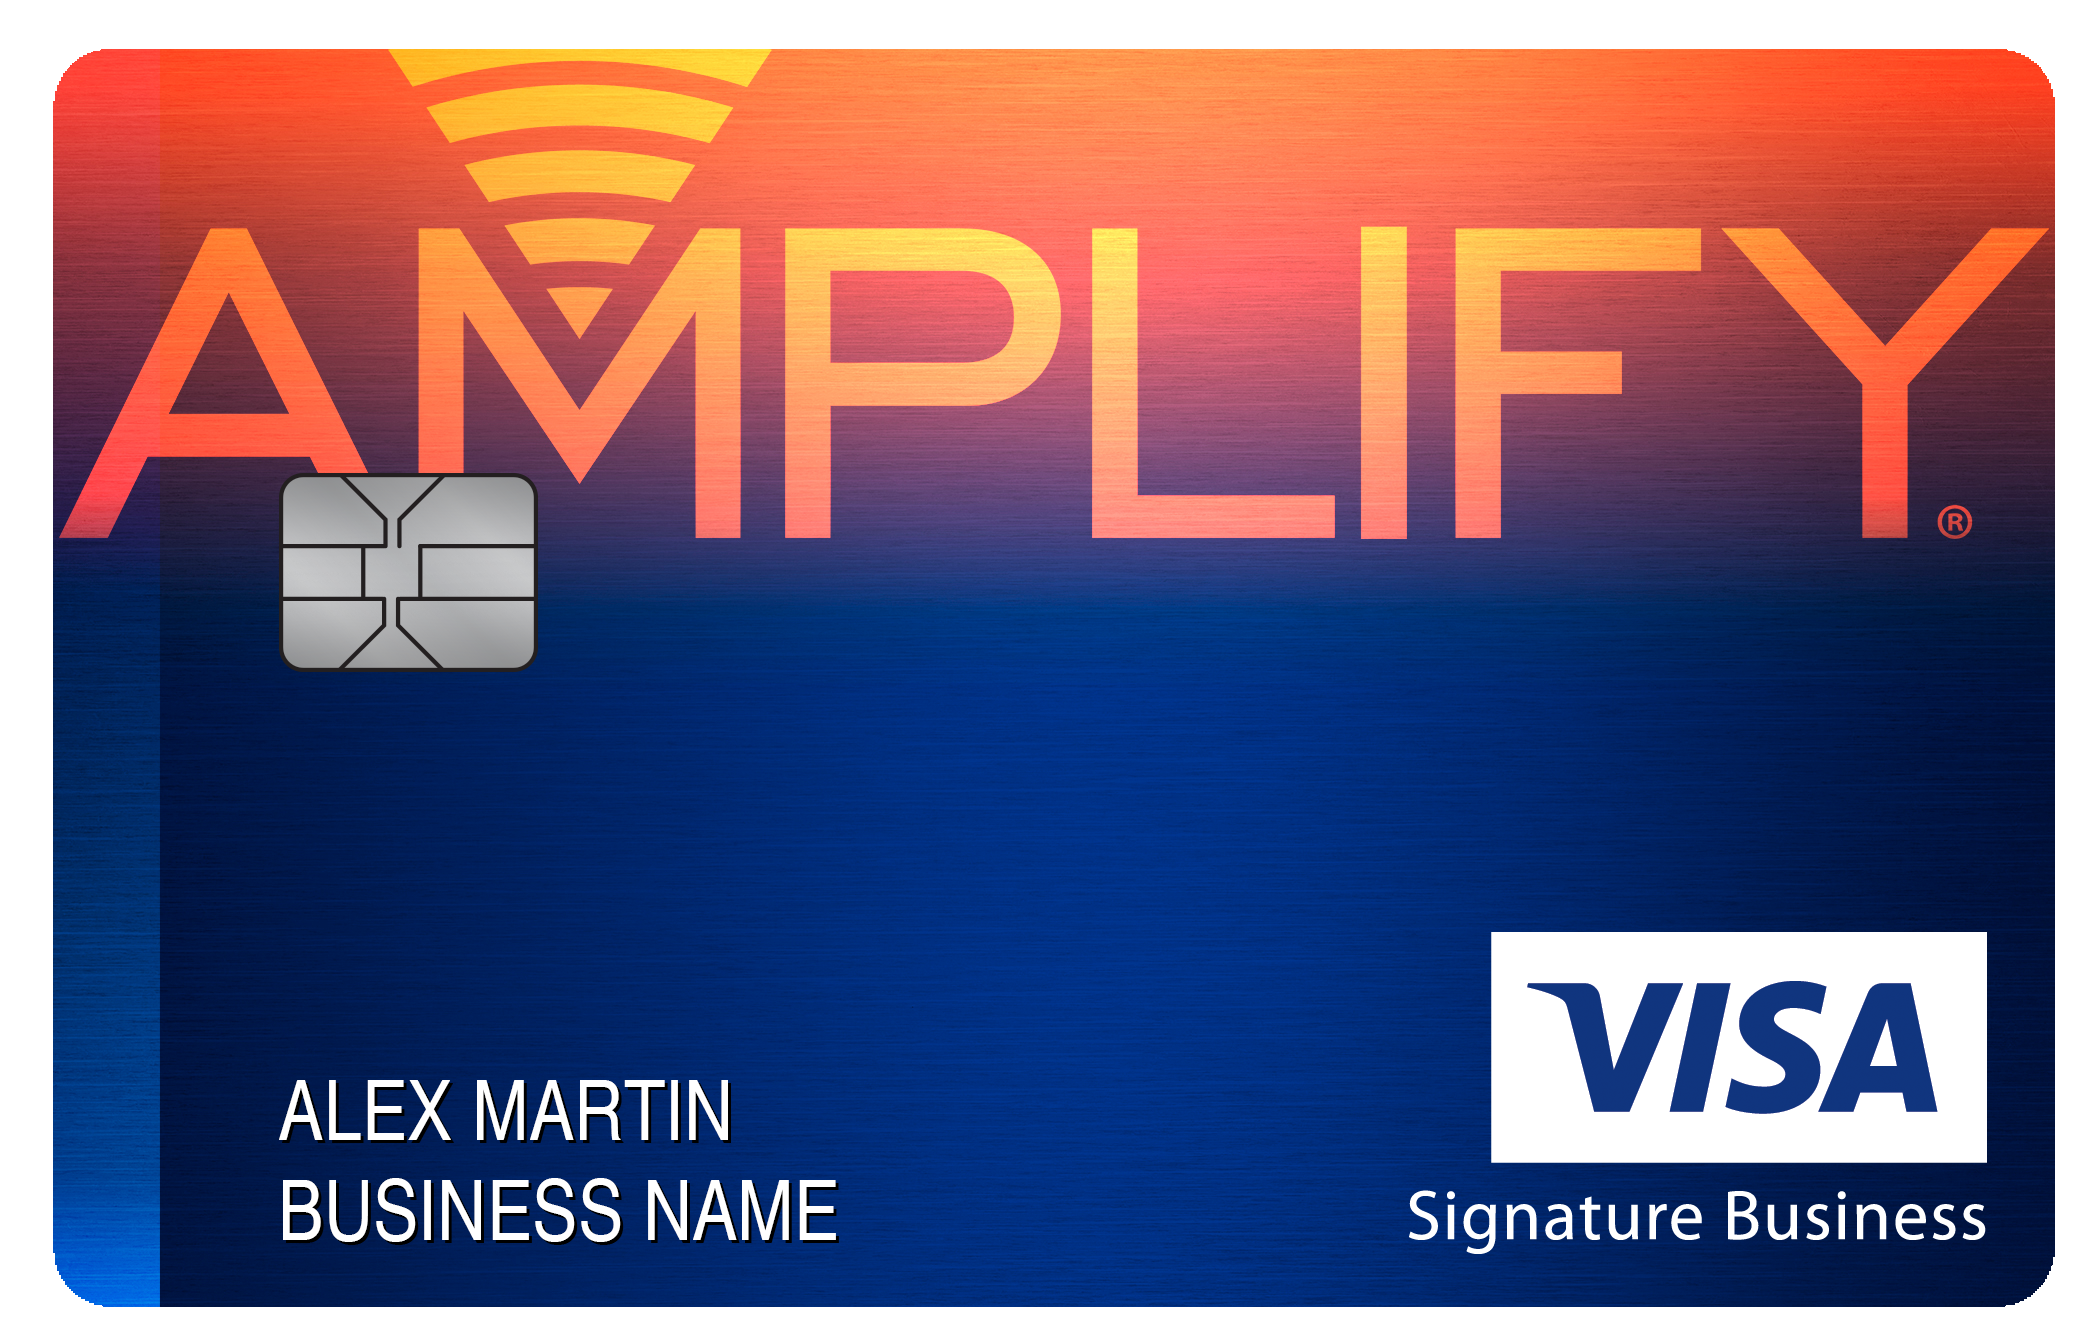 Amplify Credit Union Smart Business Rewards Card